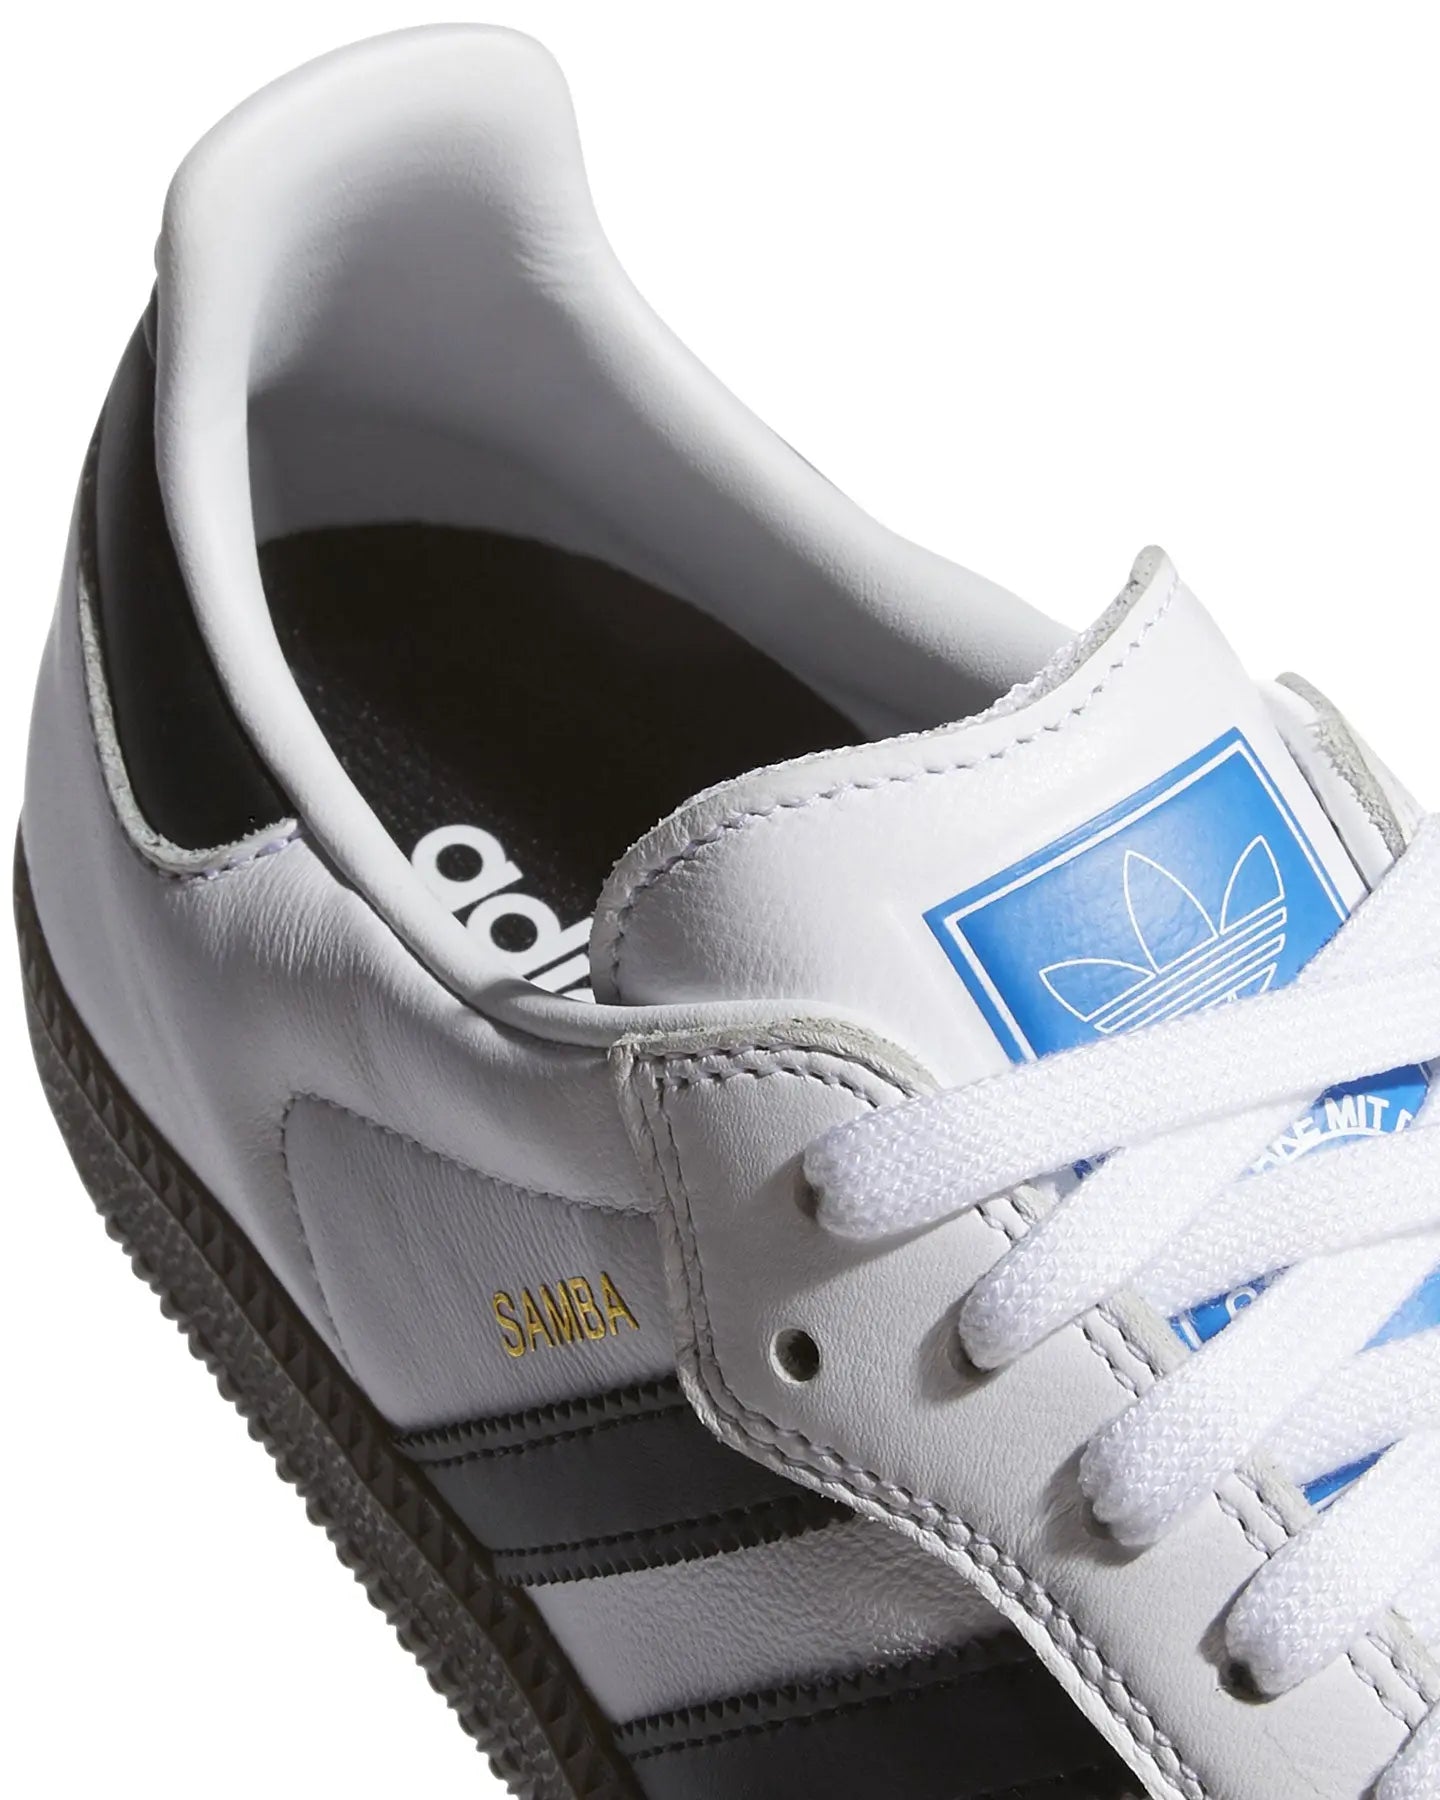 Adidas Samba ADV - White / Black / Gum Footwear